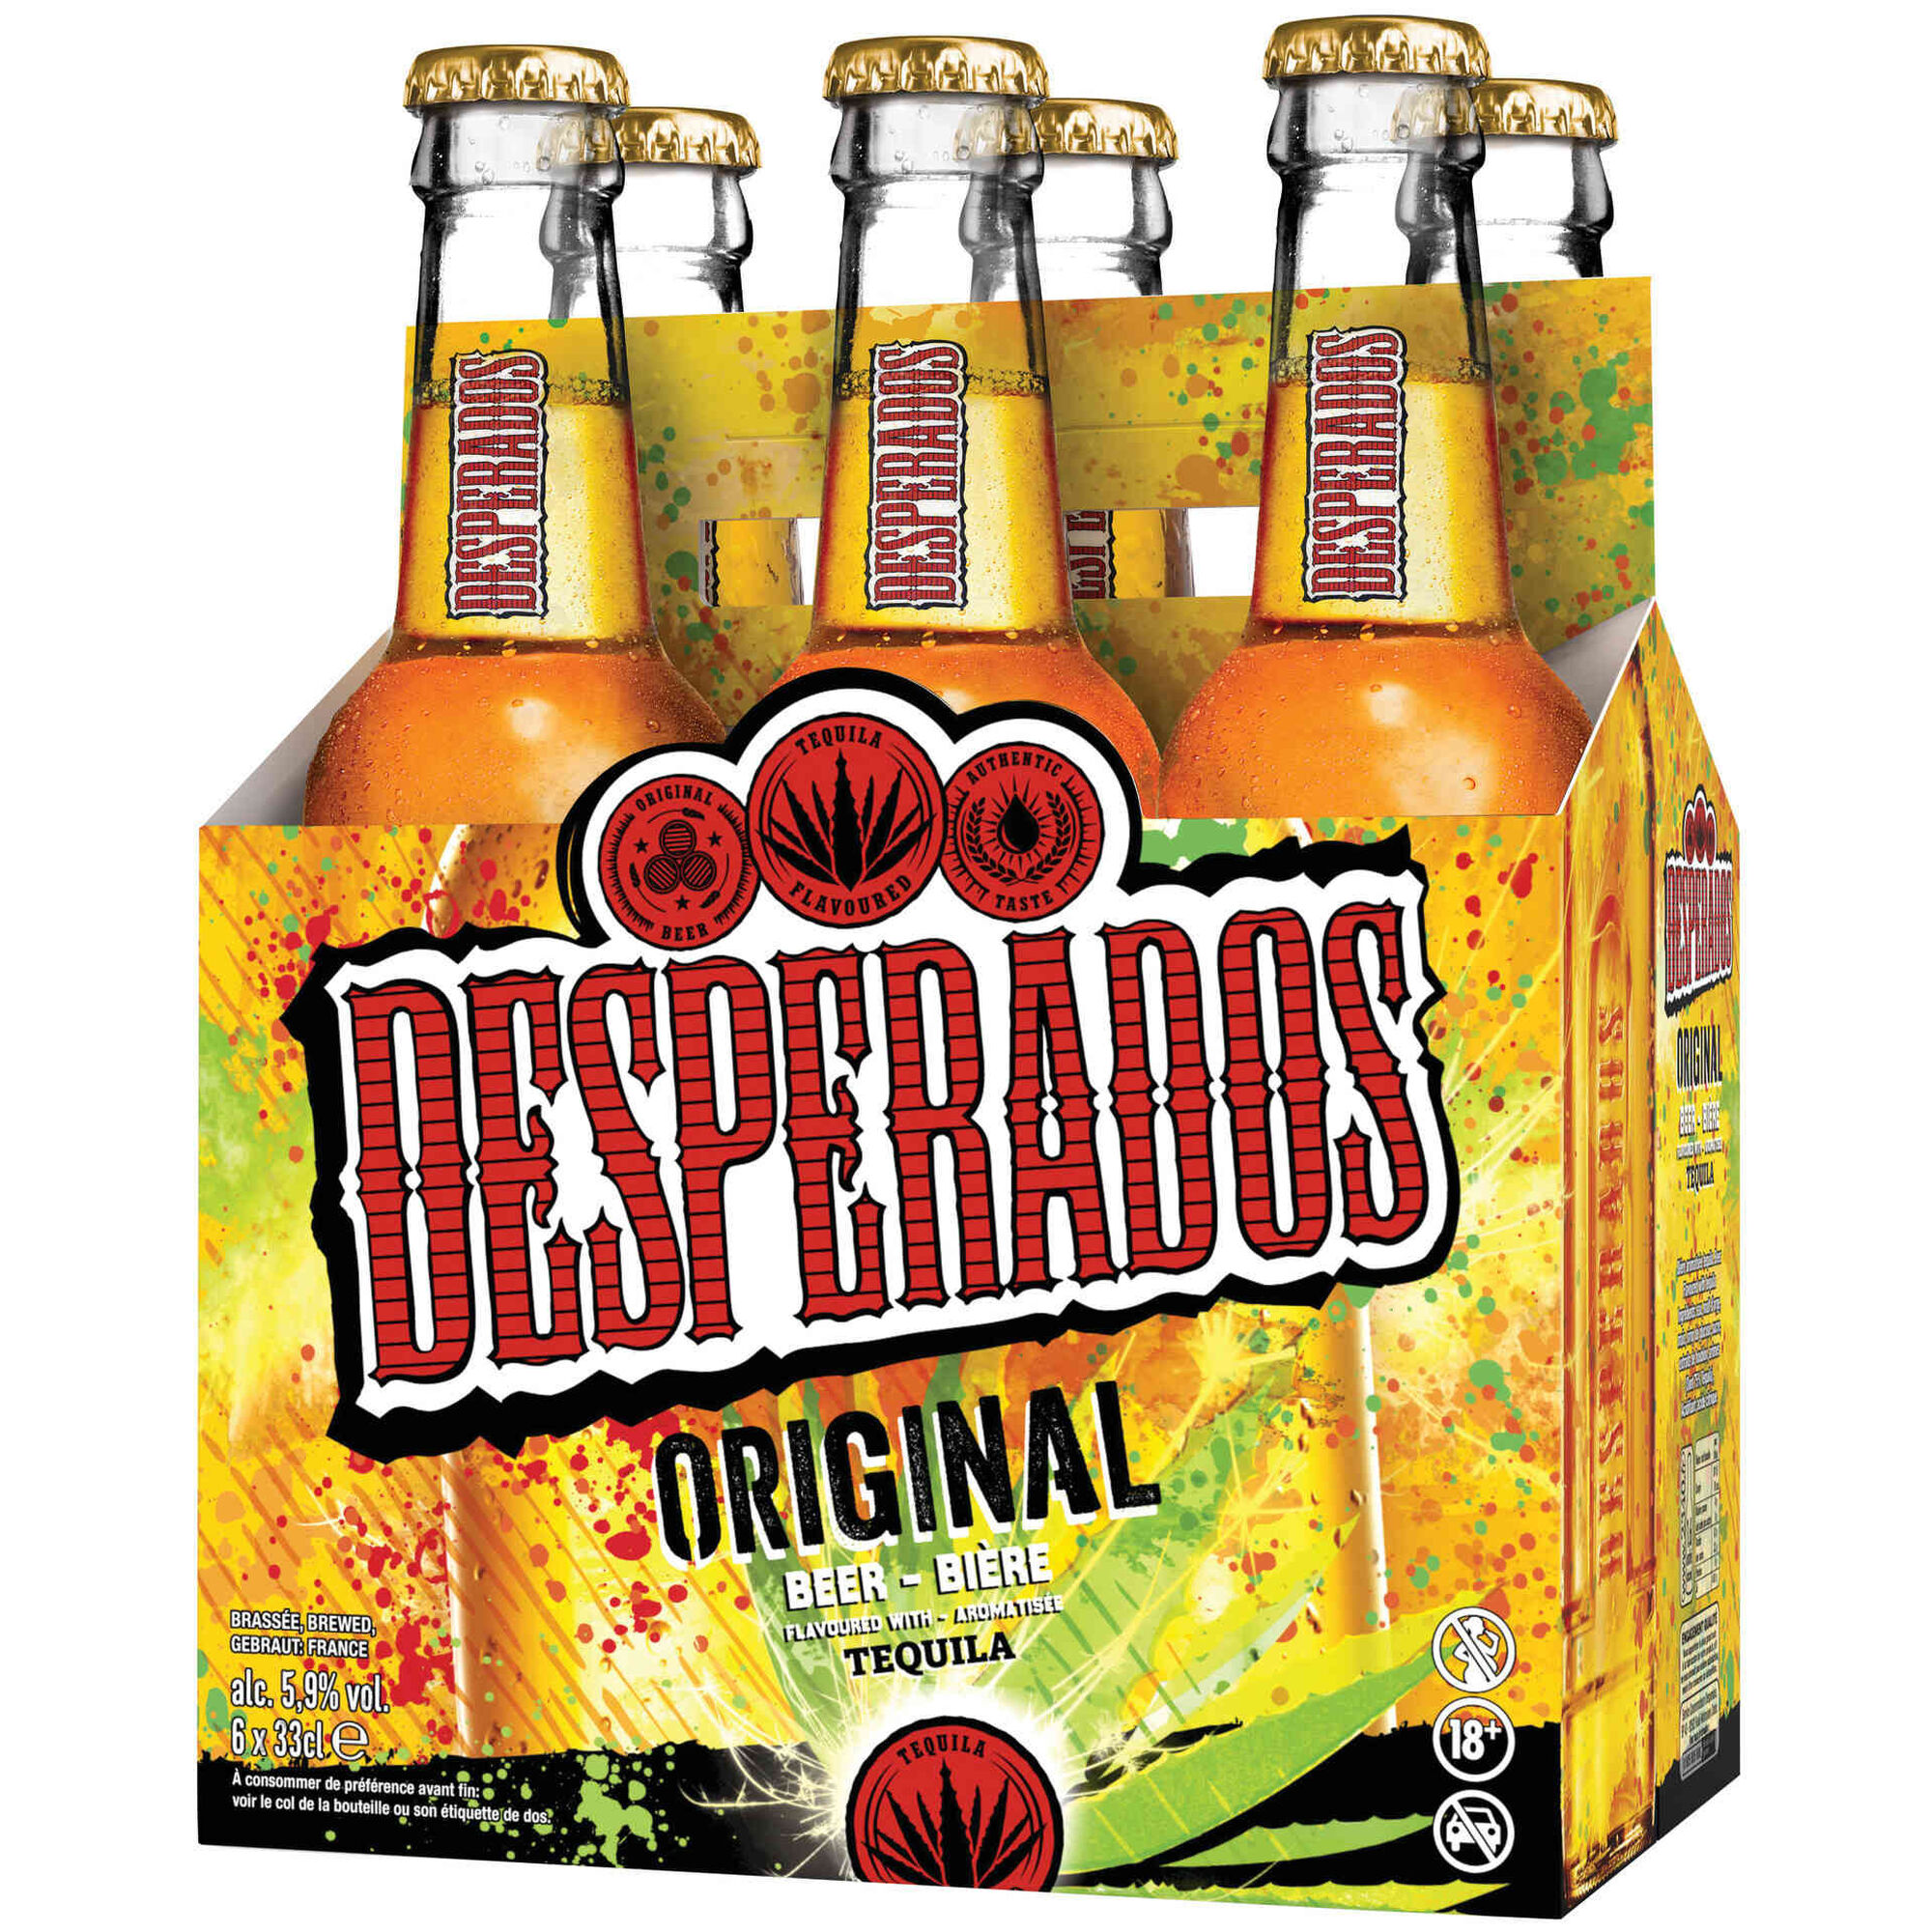 cerveja Desperados - Picture of Petiskinhos, Alcabideche - Tripadvisor